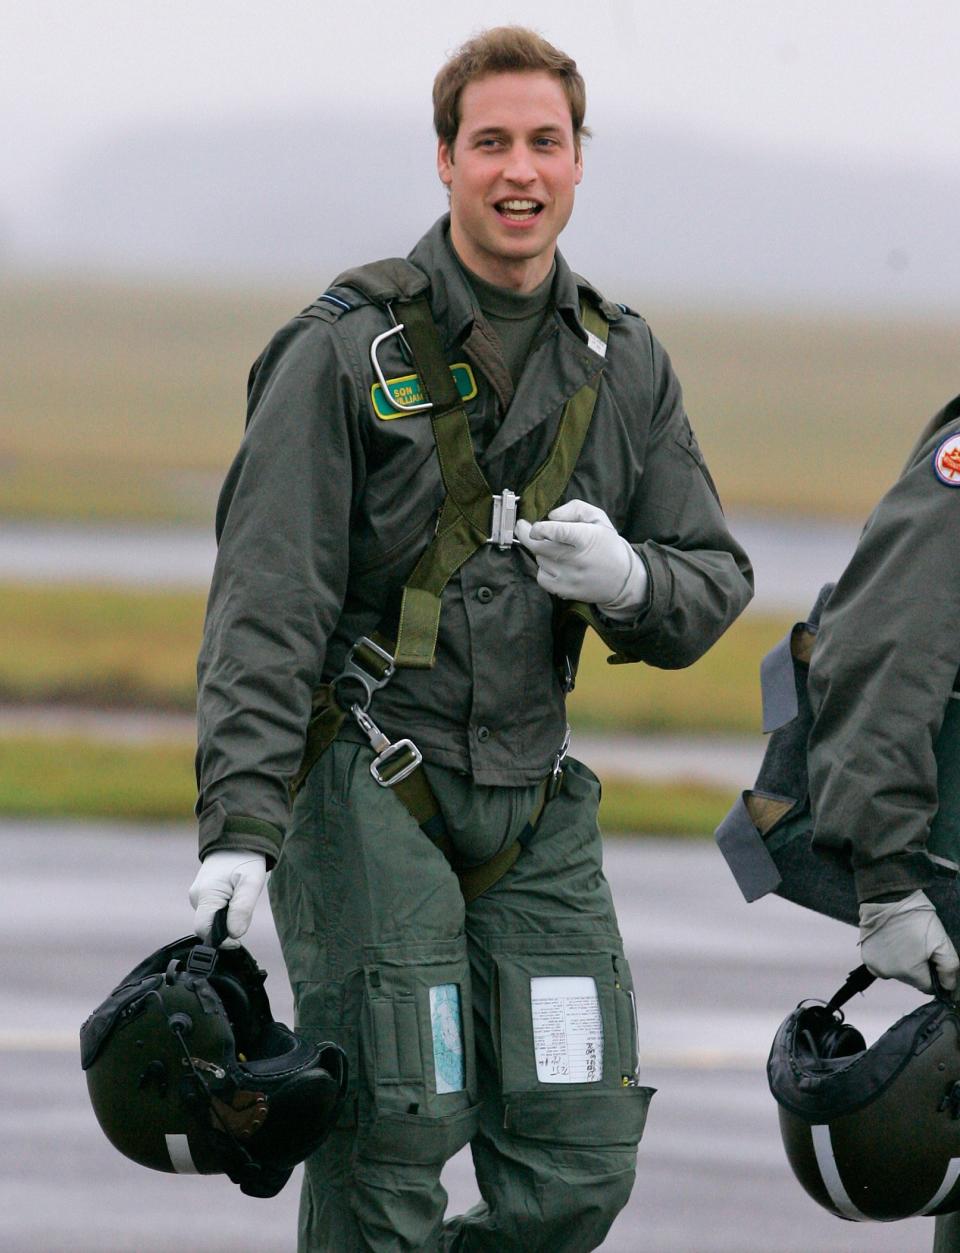 Prinz William 2008 bei einem Flugtraining. - Copyright: picture alliance / ASSOCIATED PRESS | Kirsty Wigglesworth